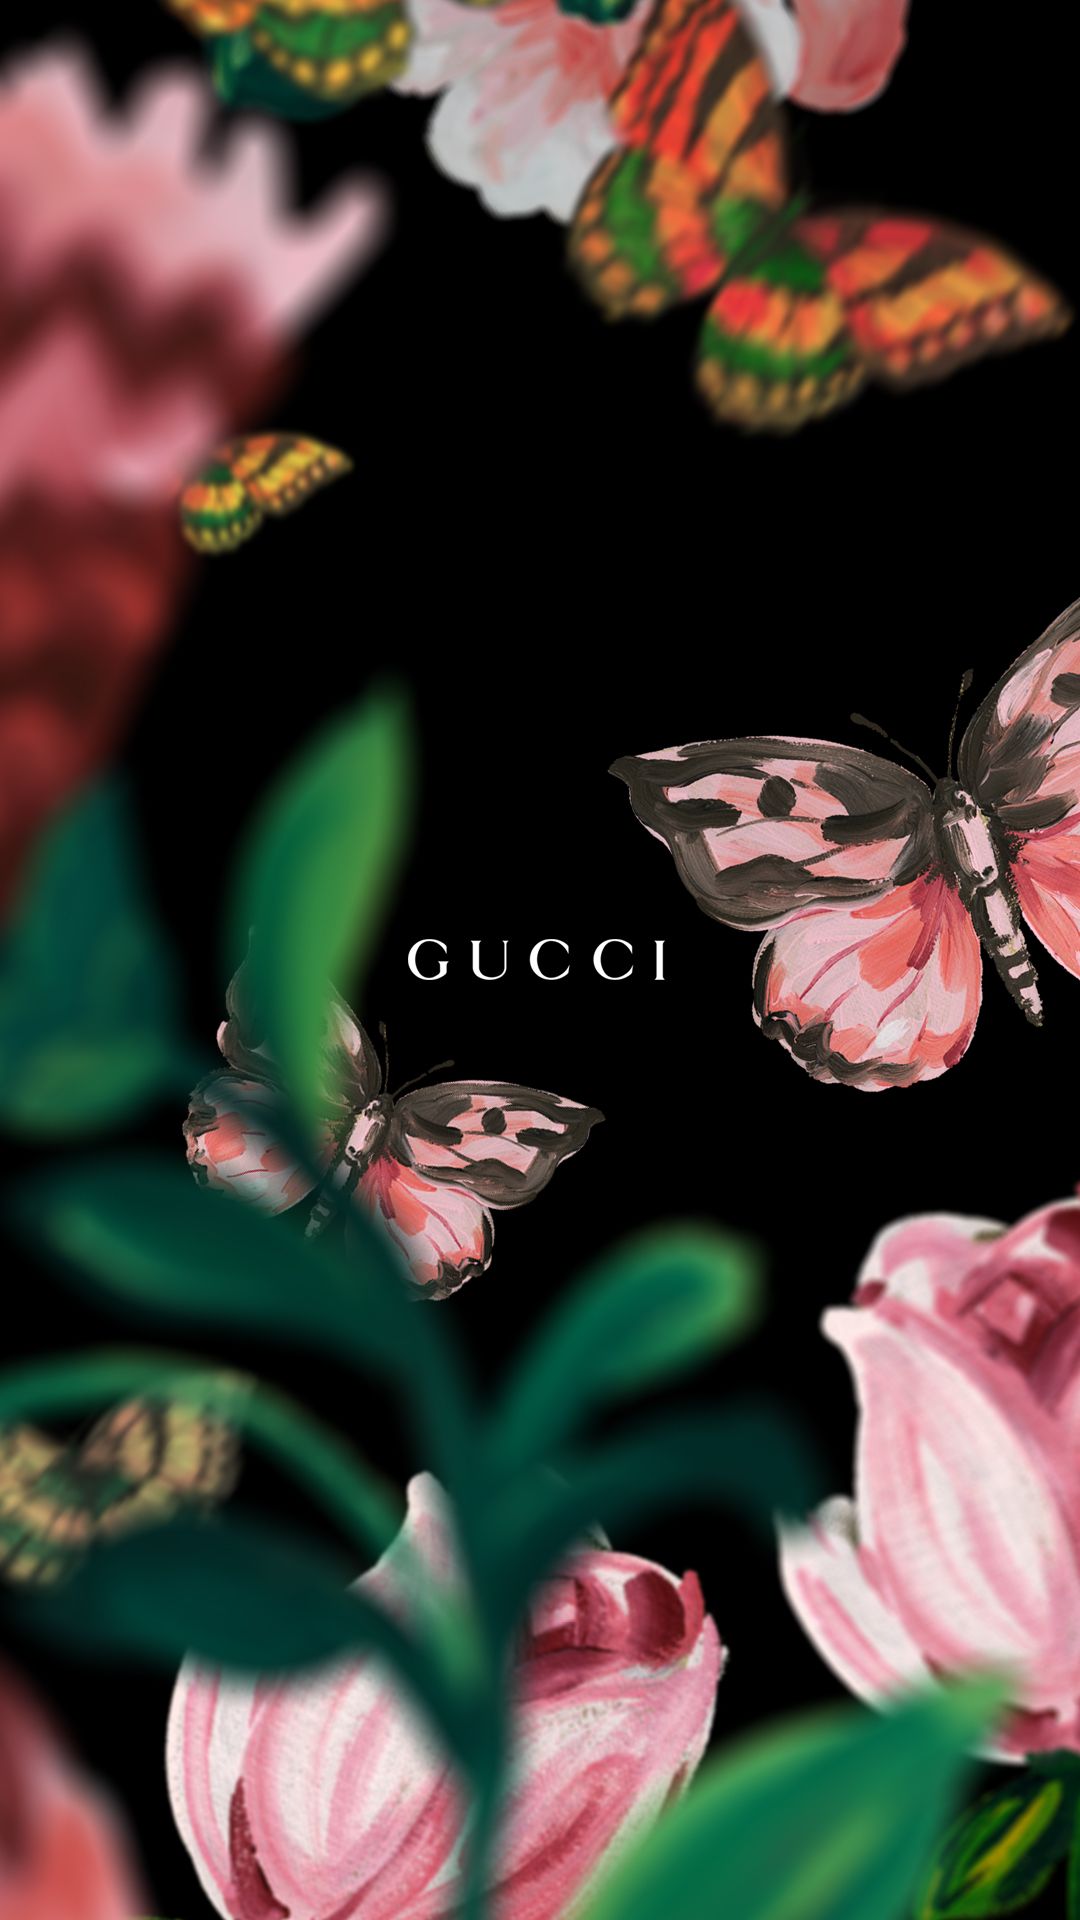 Diamondwallpers. Gucci iphone, Supreme iphone , Louis vuitton iphone, Gucci  Apple Logo HD phone wallpaper